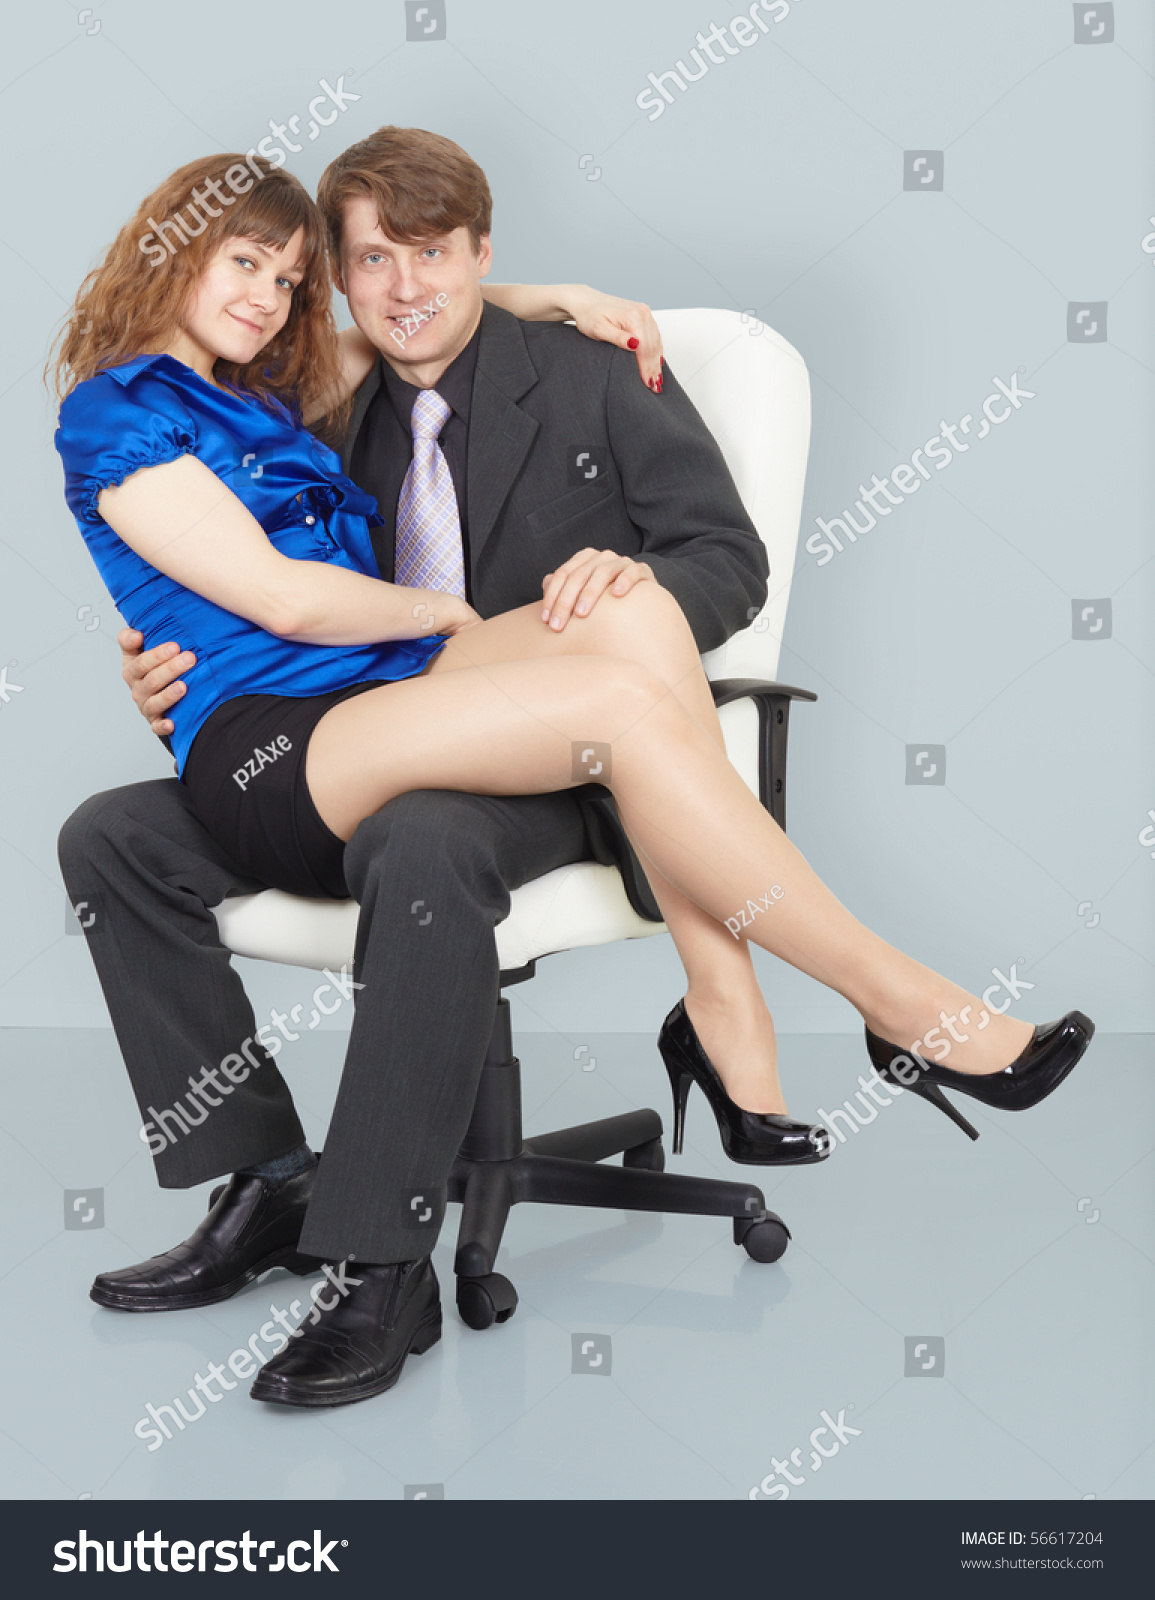 woman sitting on lap